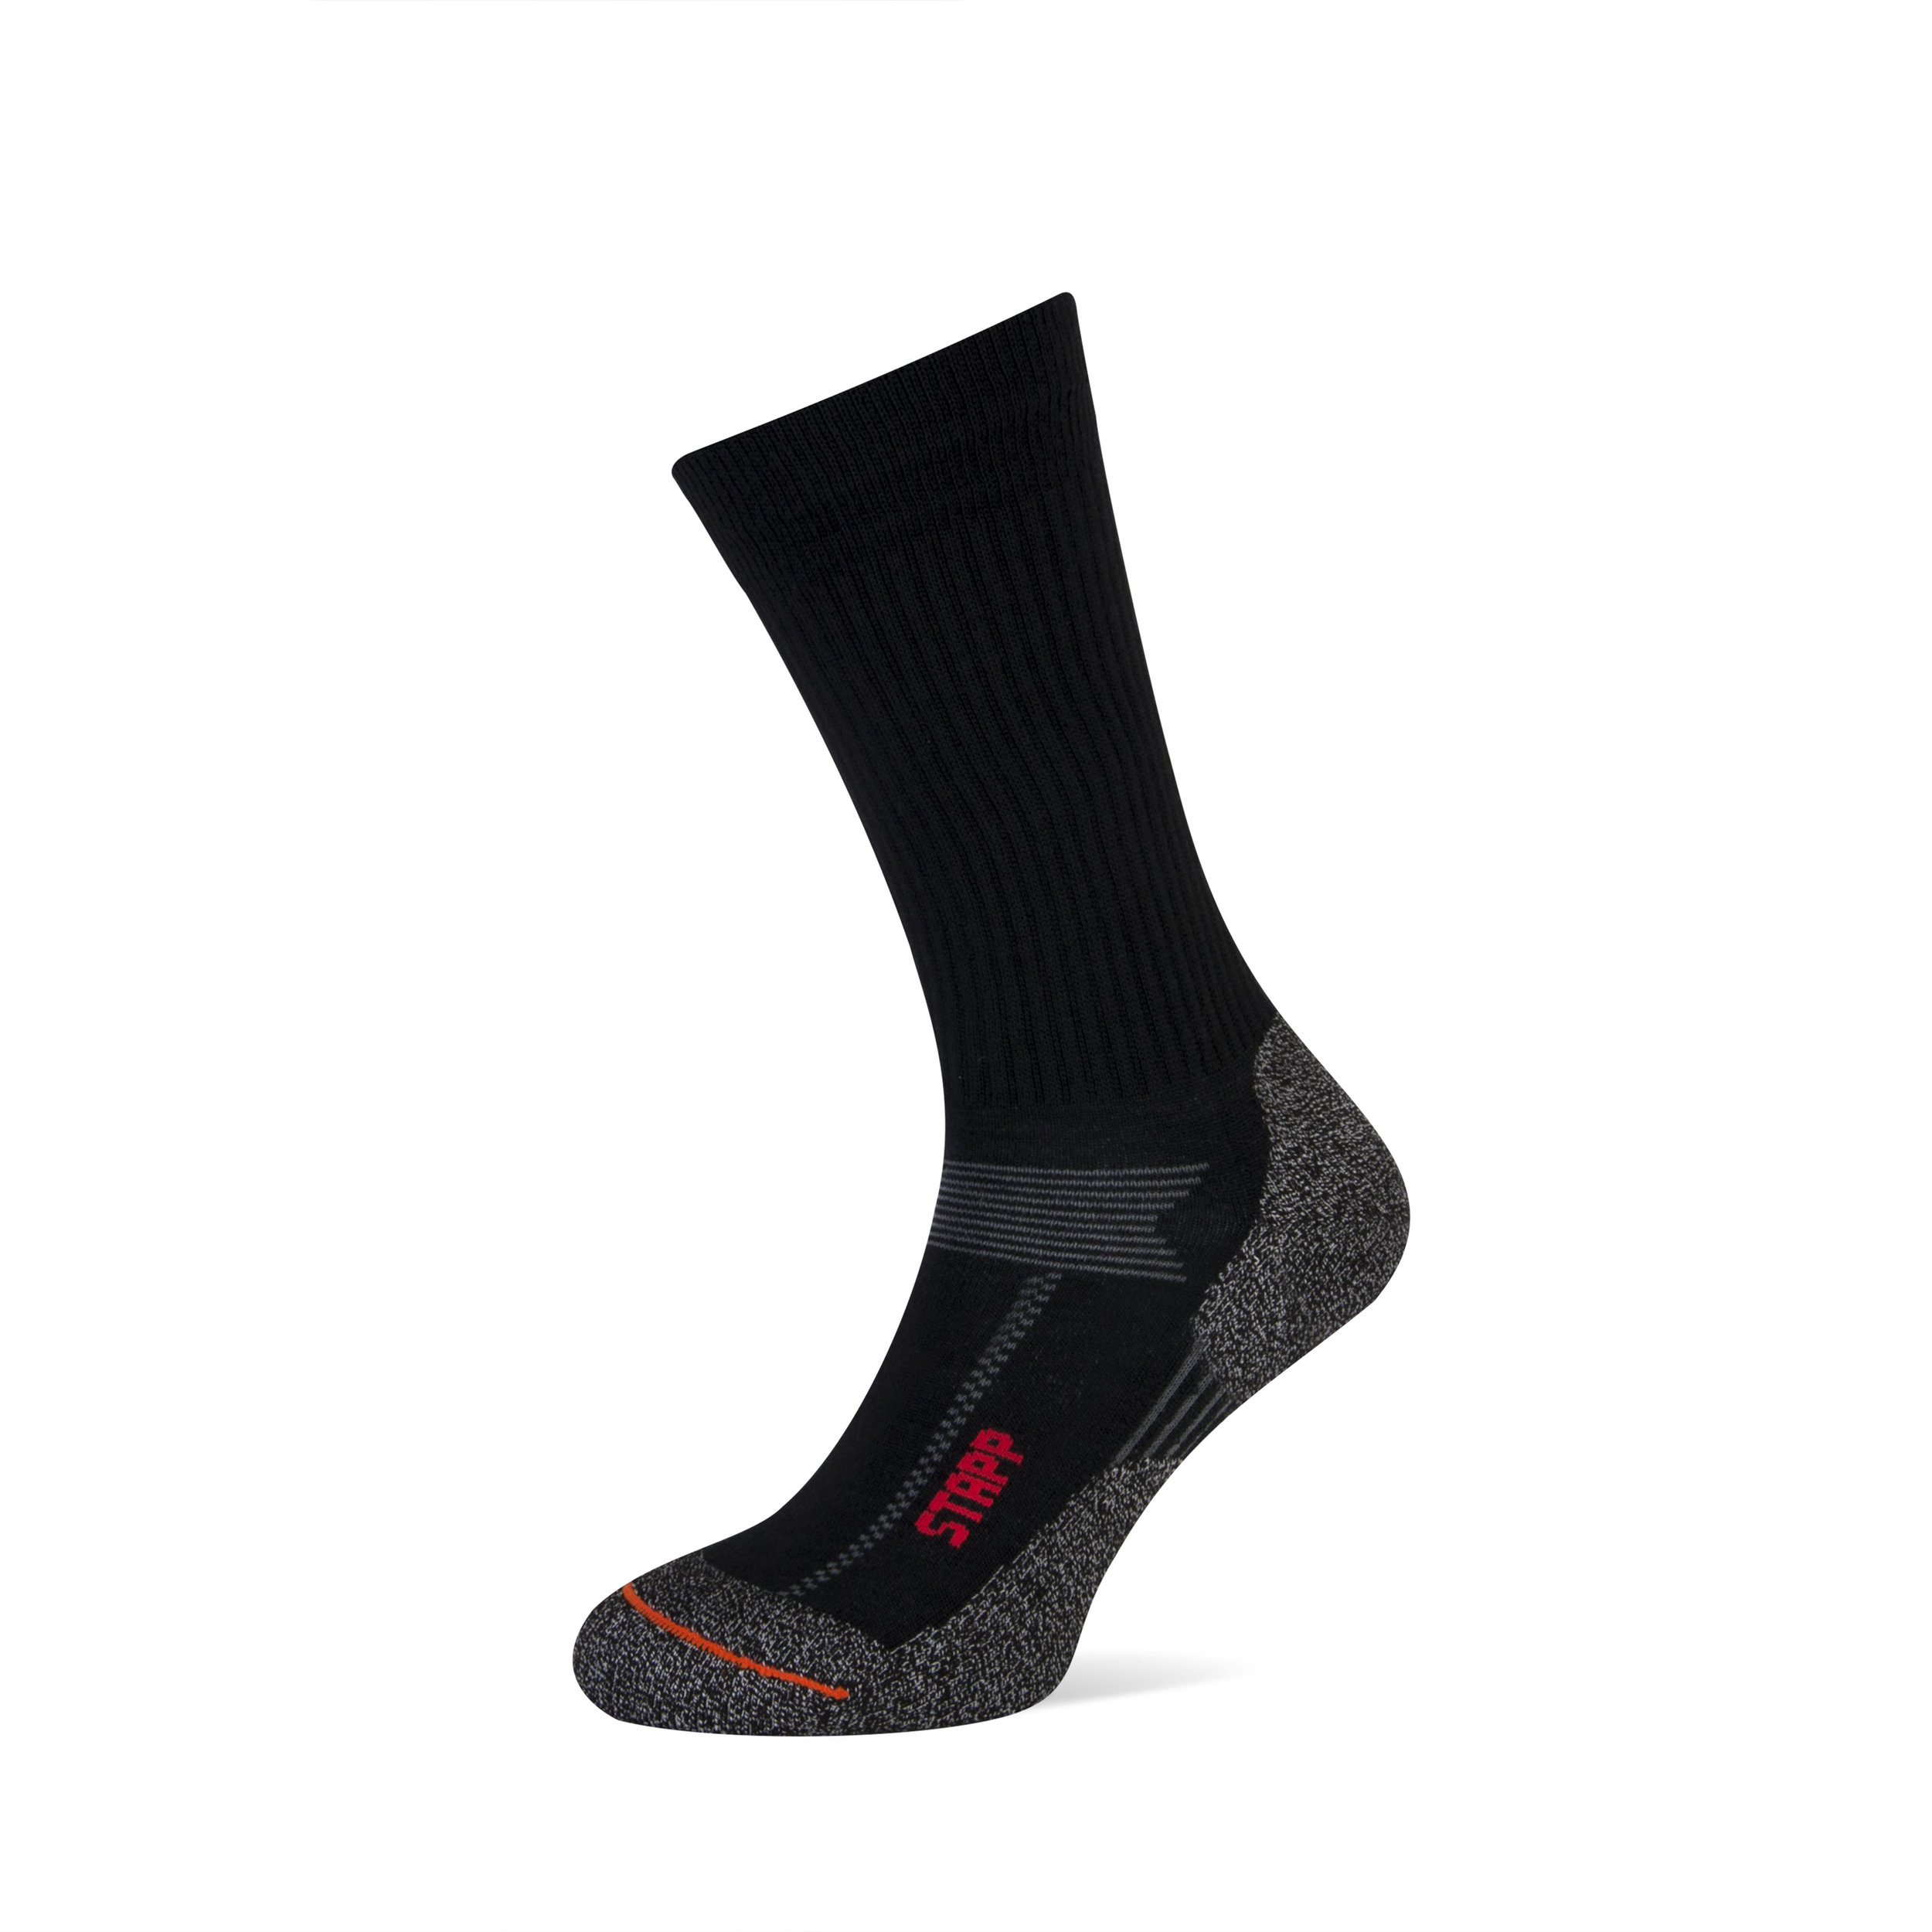 Stapp Techno — Stapp socks